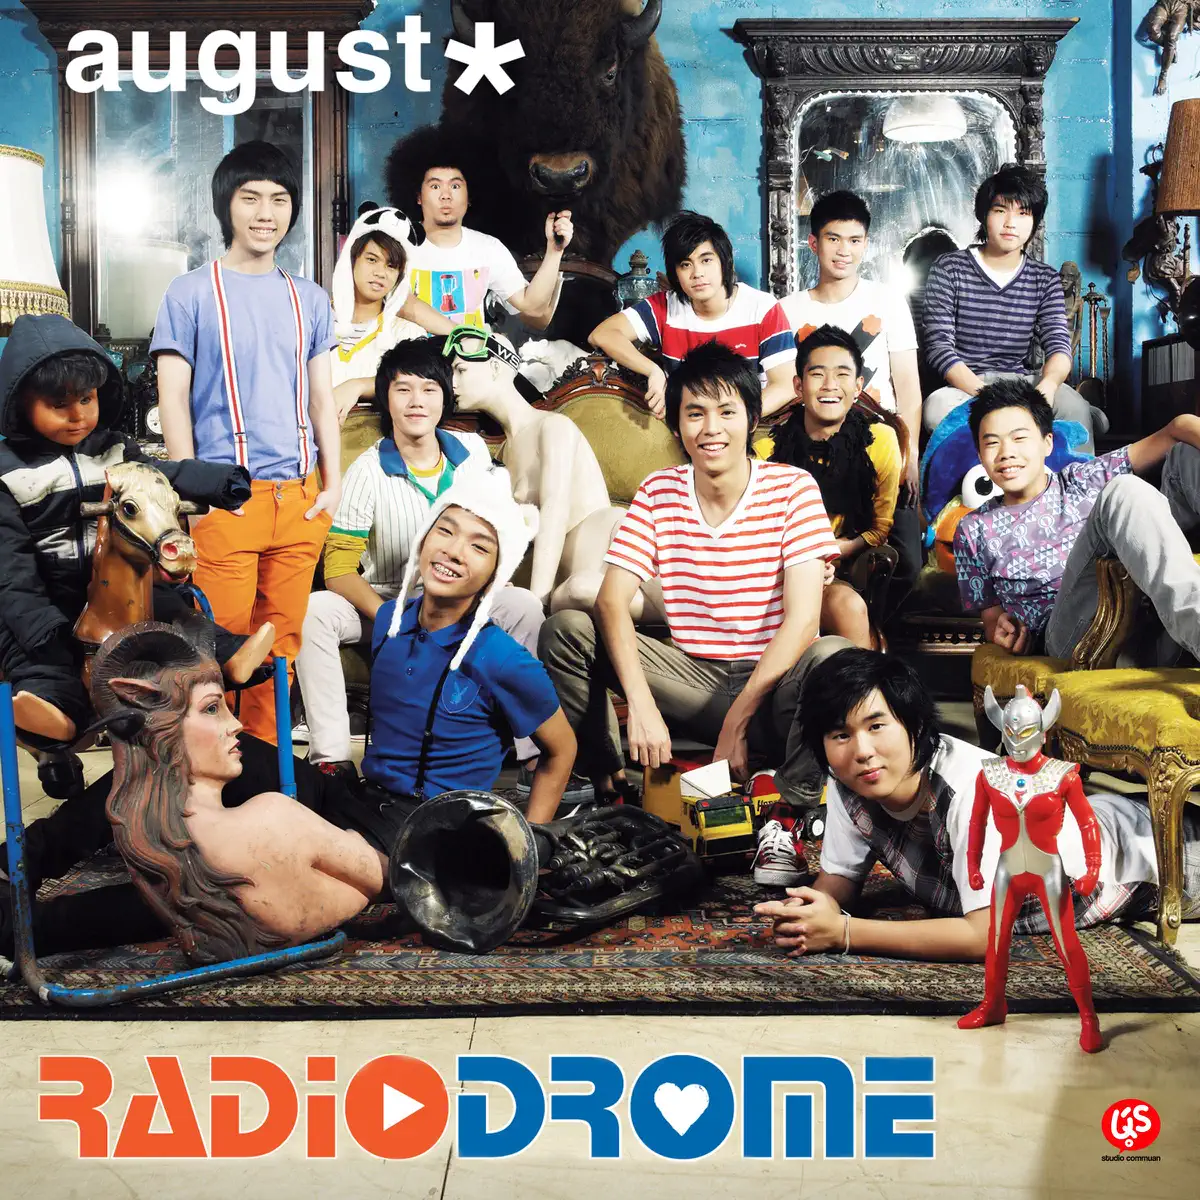 August Band - Radiodrome (2014) [iTunes Plus AAC M4A]-新房子